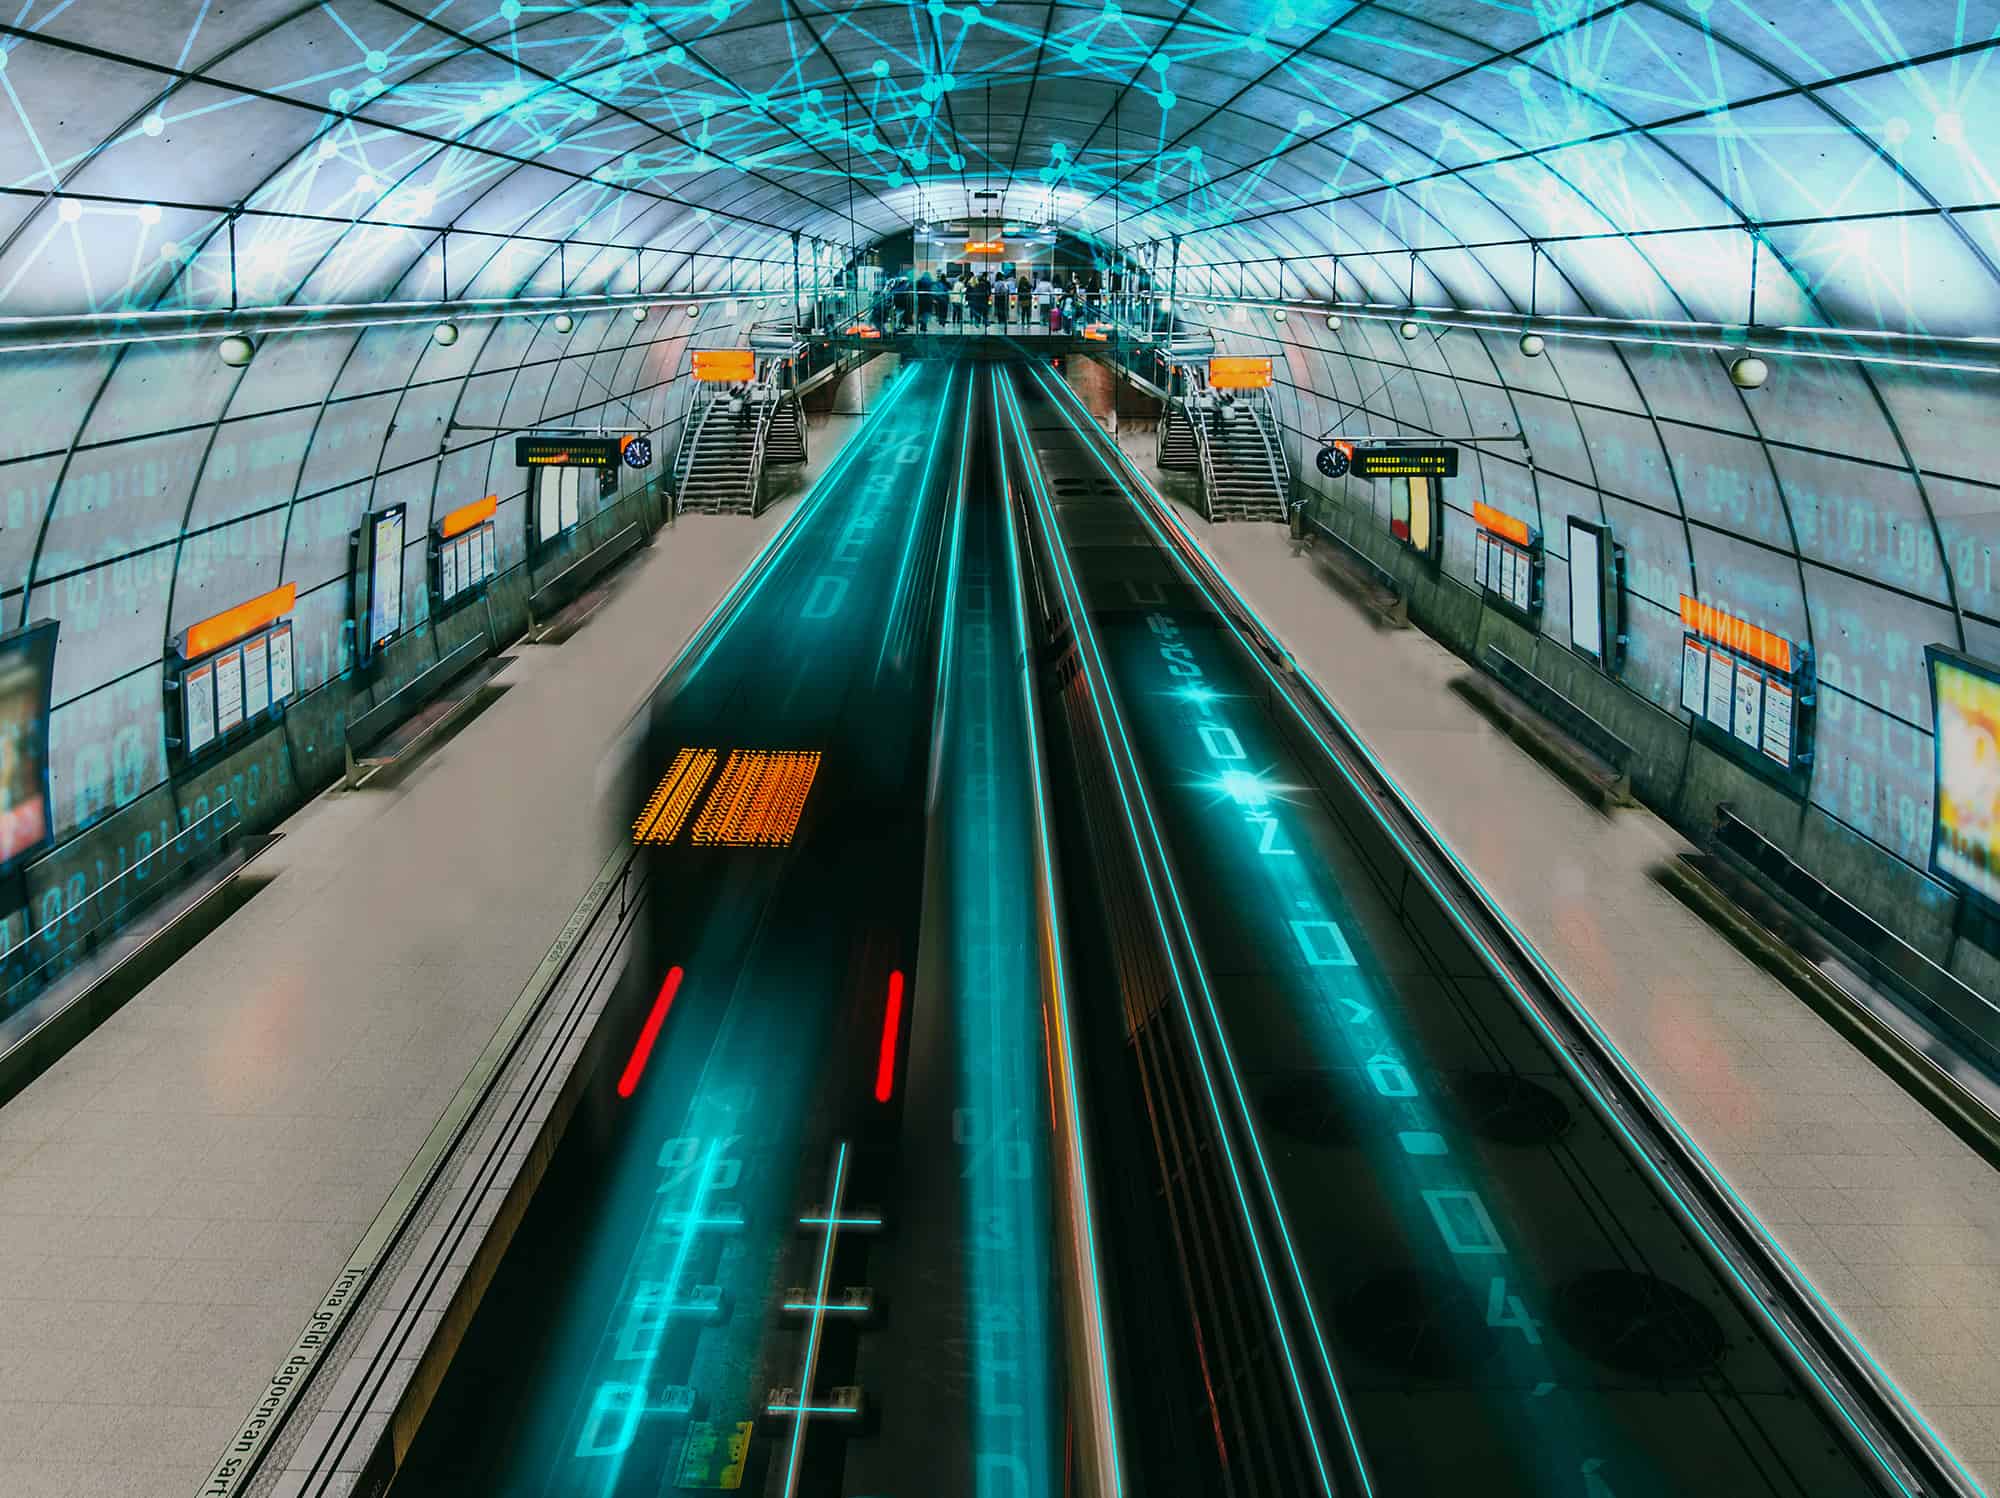 Modern train station interior with motion-blurred train and futuristic architecture.